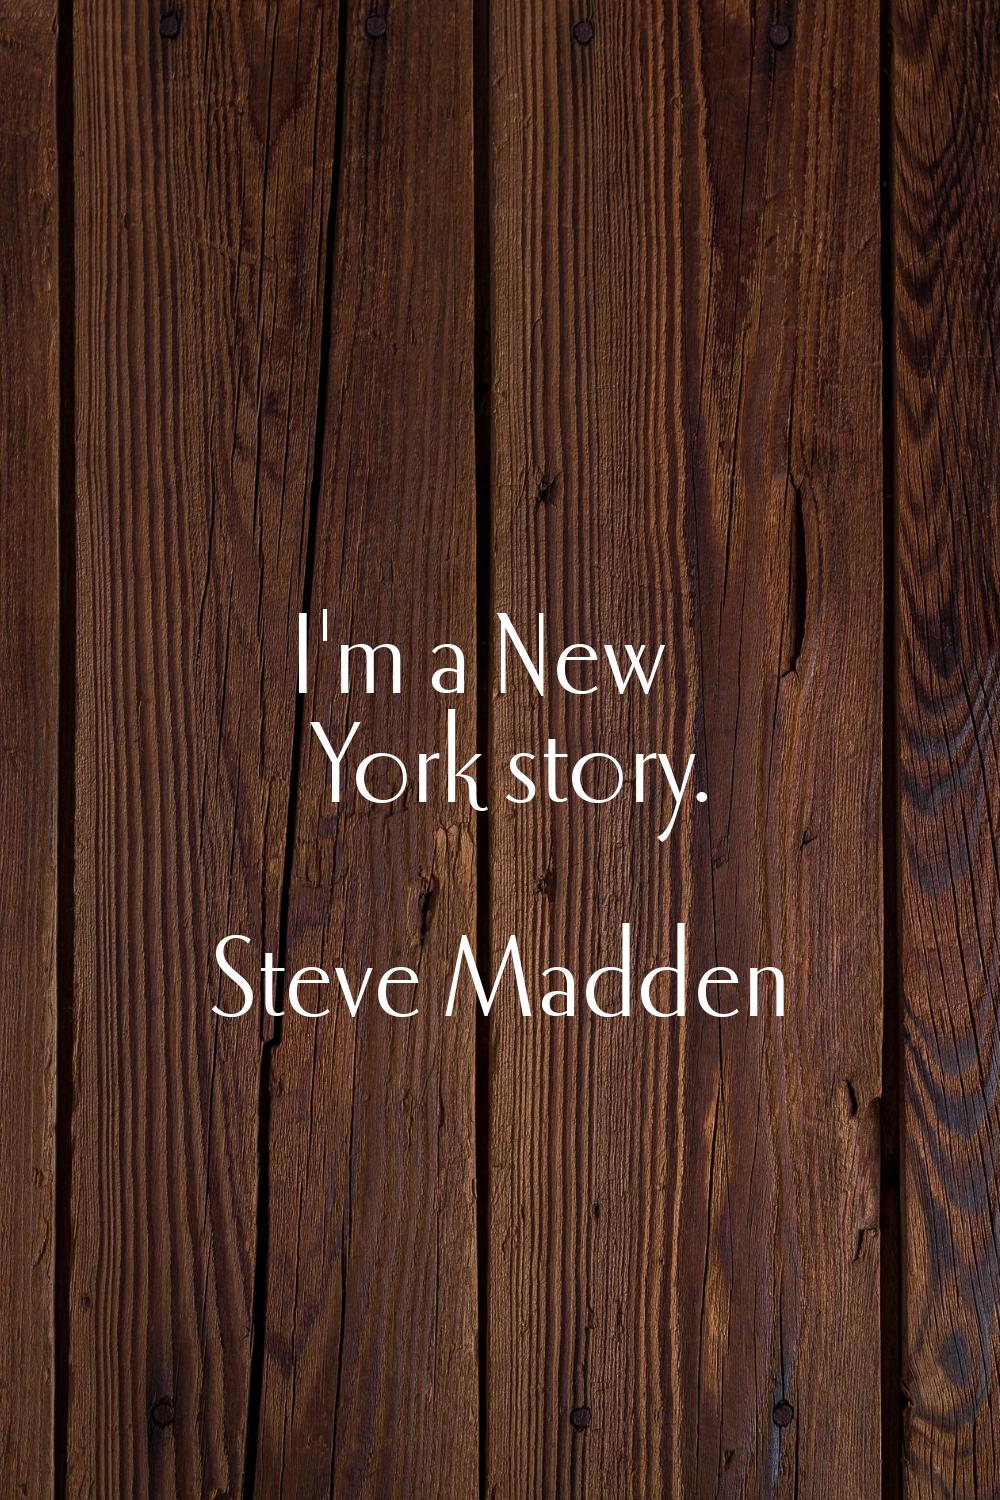 I'm a New York story.